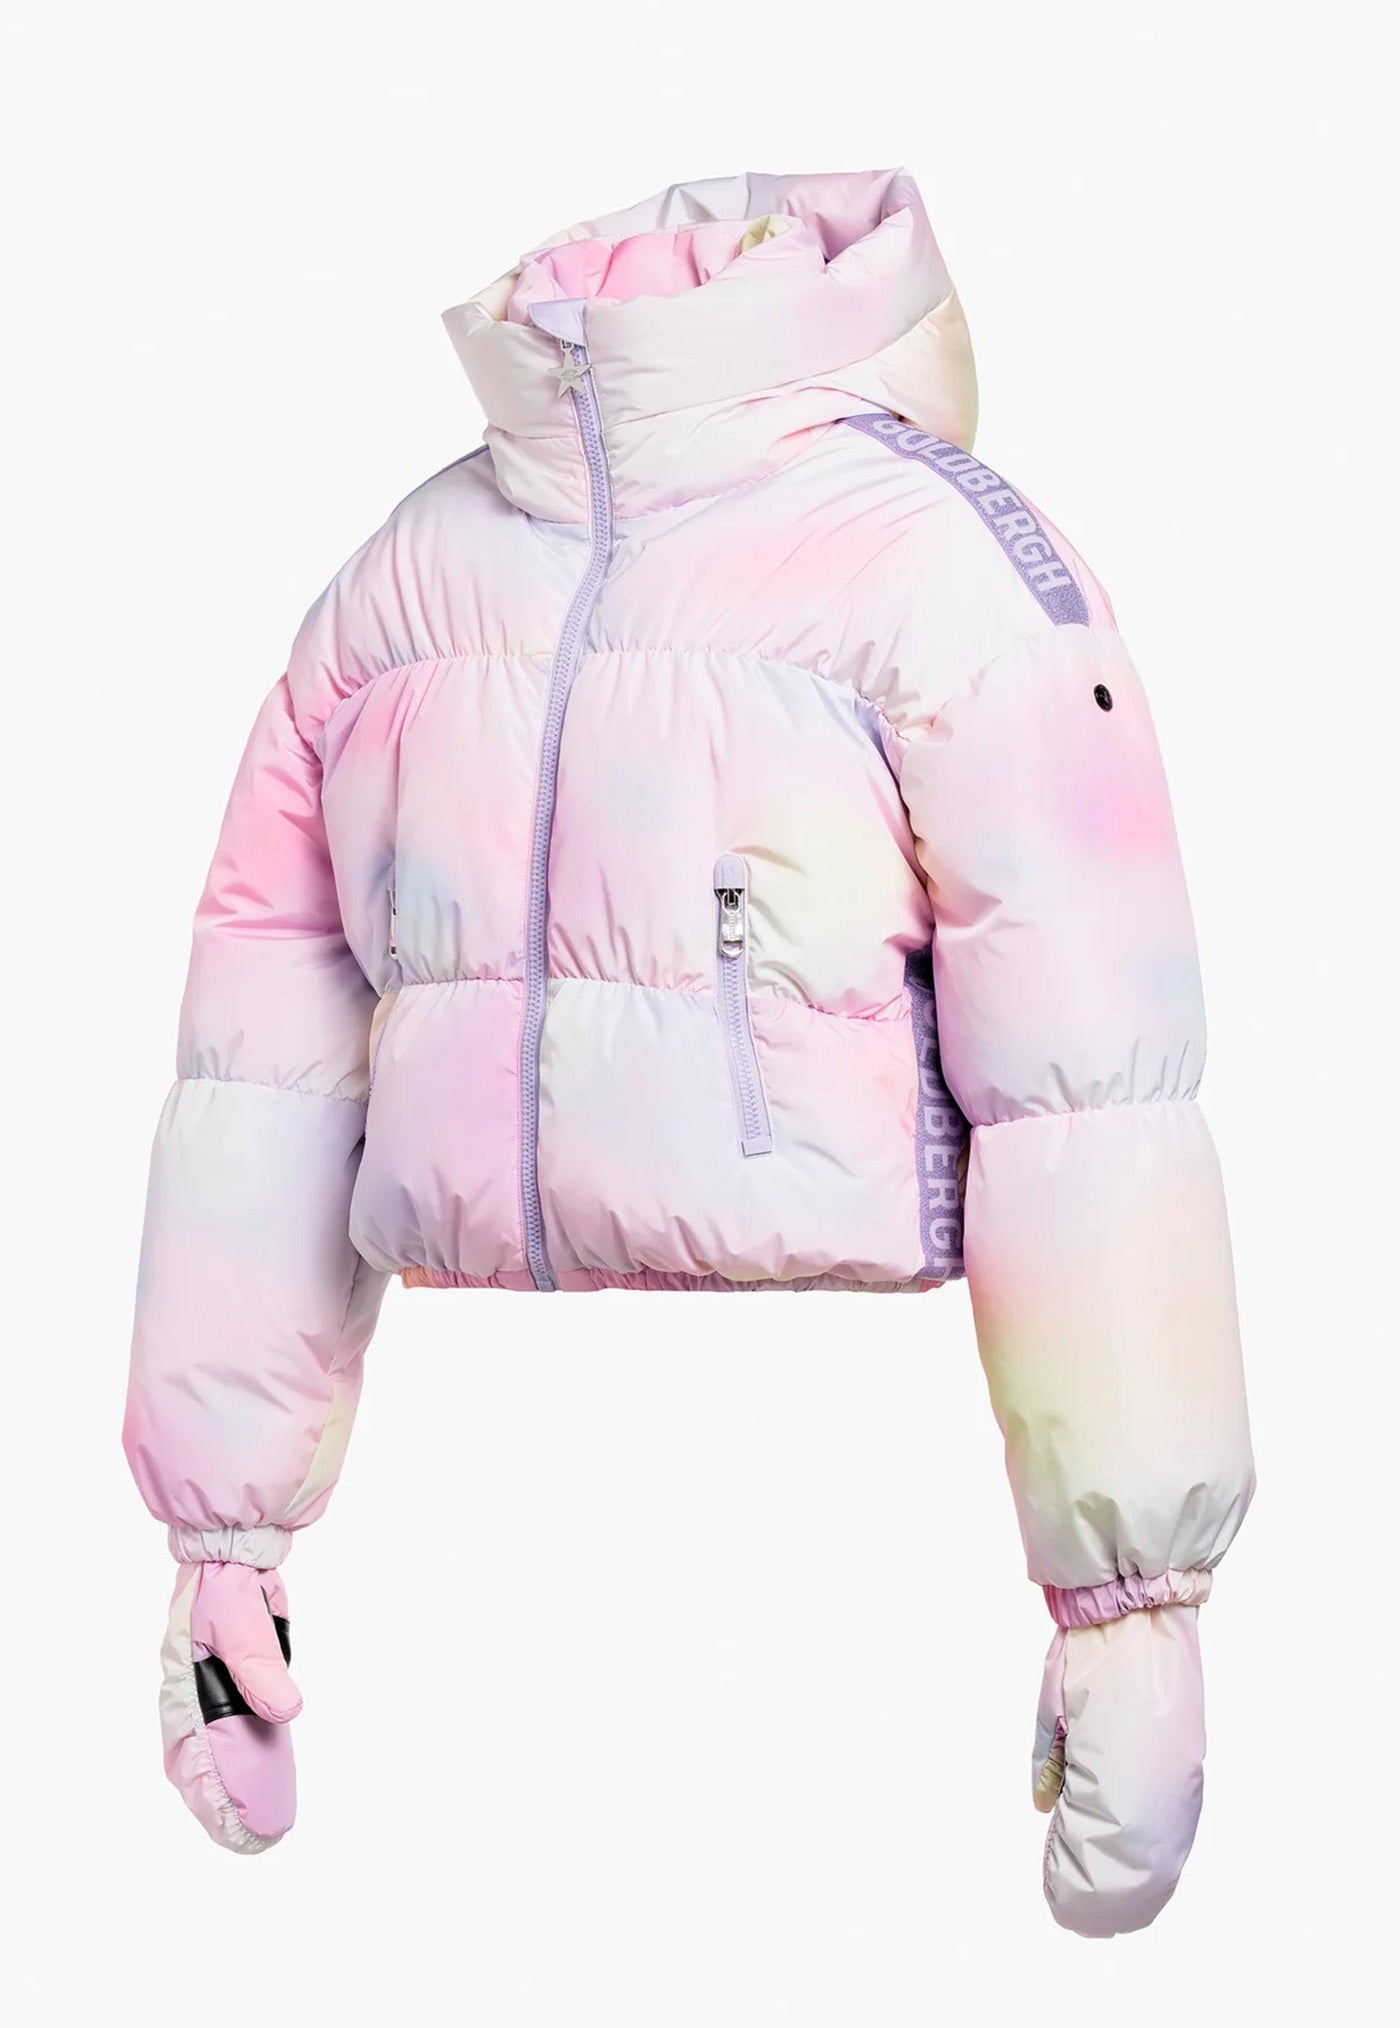 Lumina Ski Jacket - Lumina Pastel sold by Angel Divine